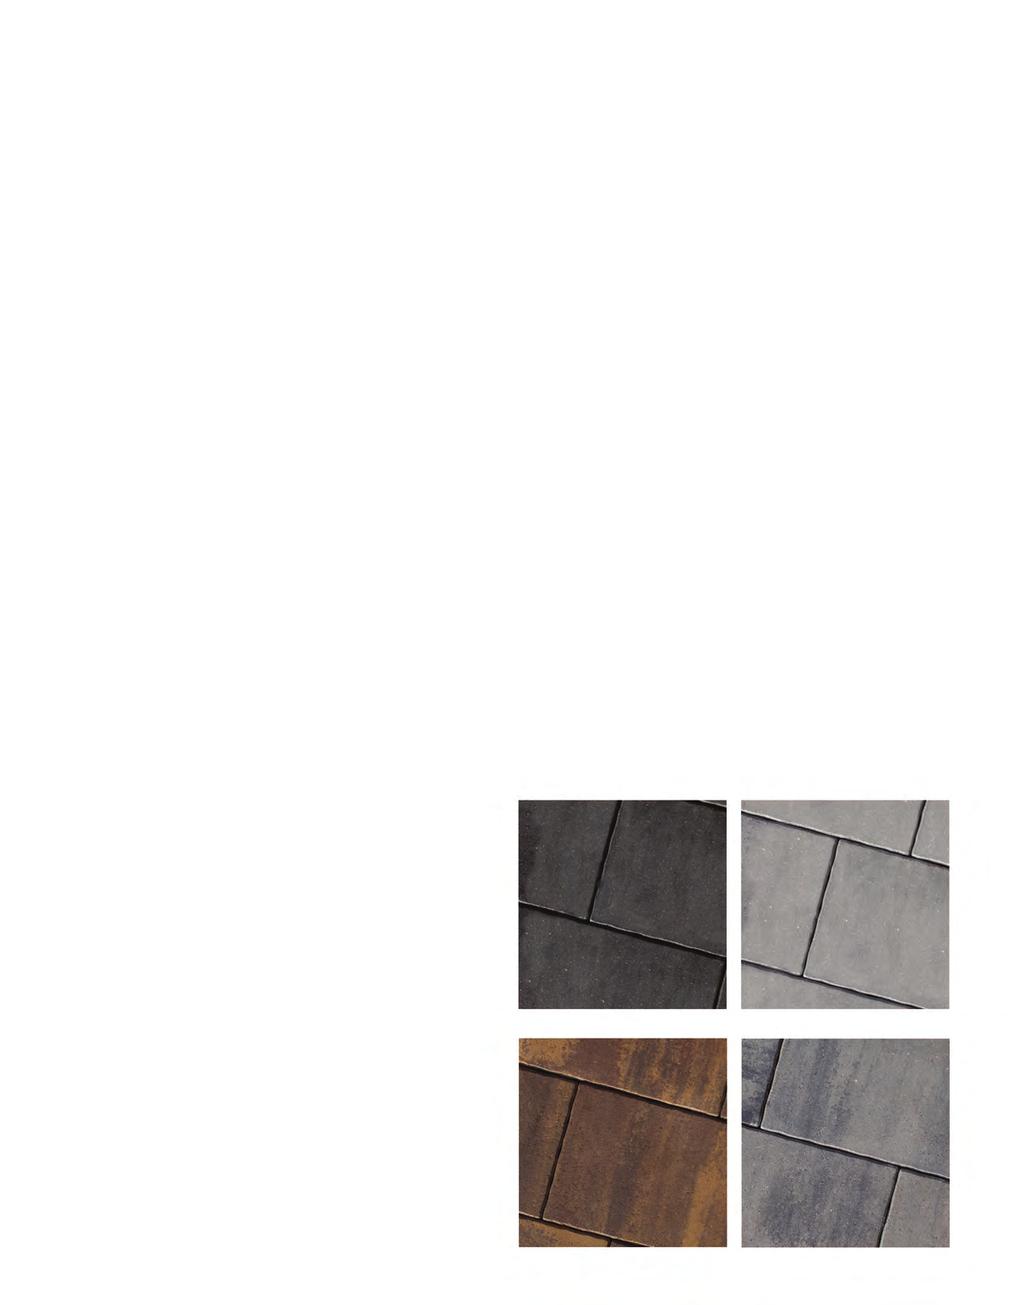 Beechwood brown/charcoal/buff Cascade gray/black broadmour (6cm) 6" x 12", 12" x 12", 12" x 24", 24" x 24" x 2.